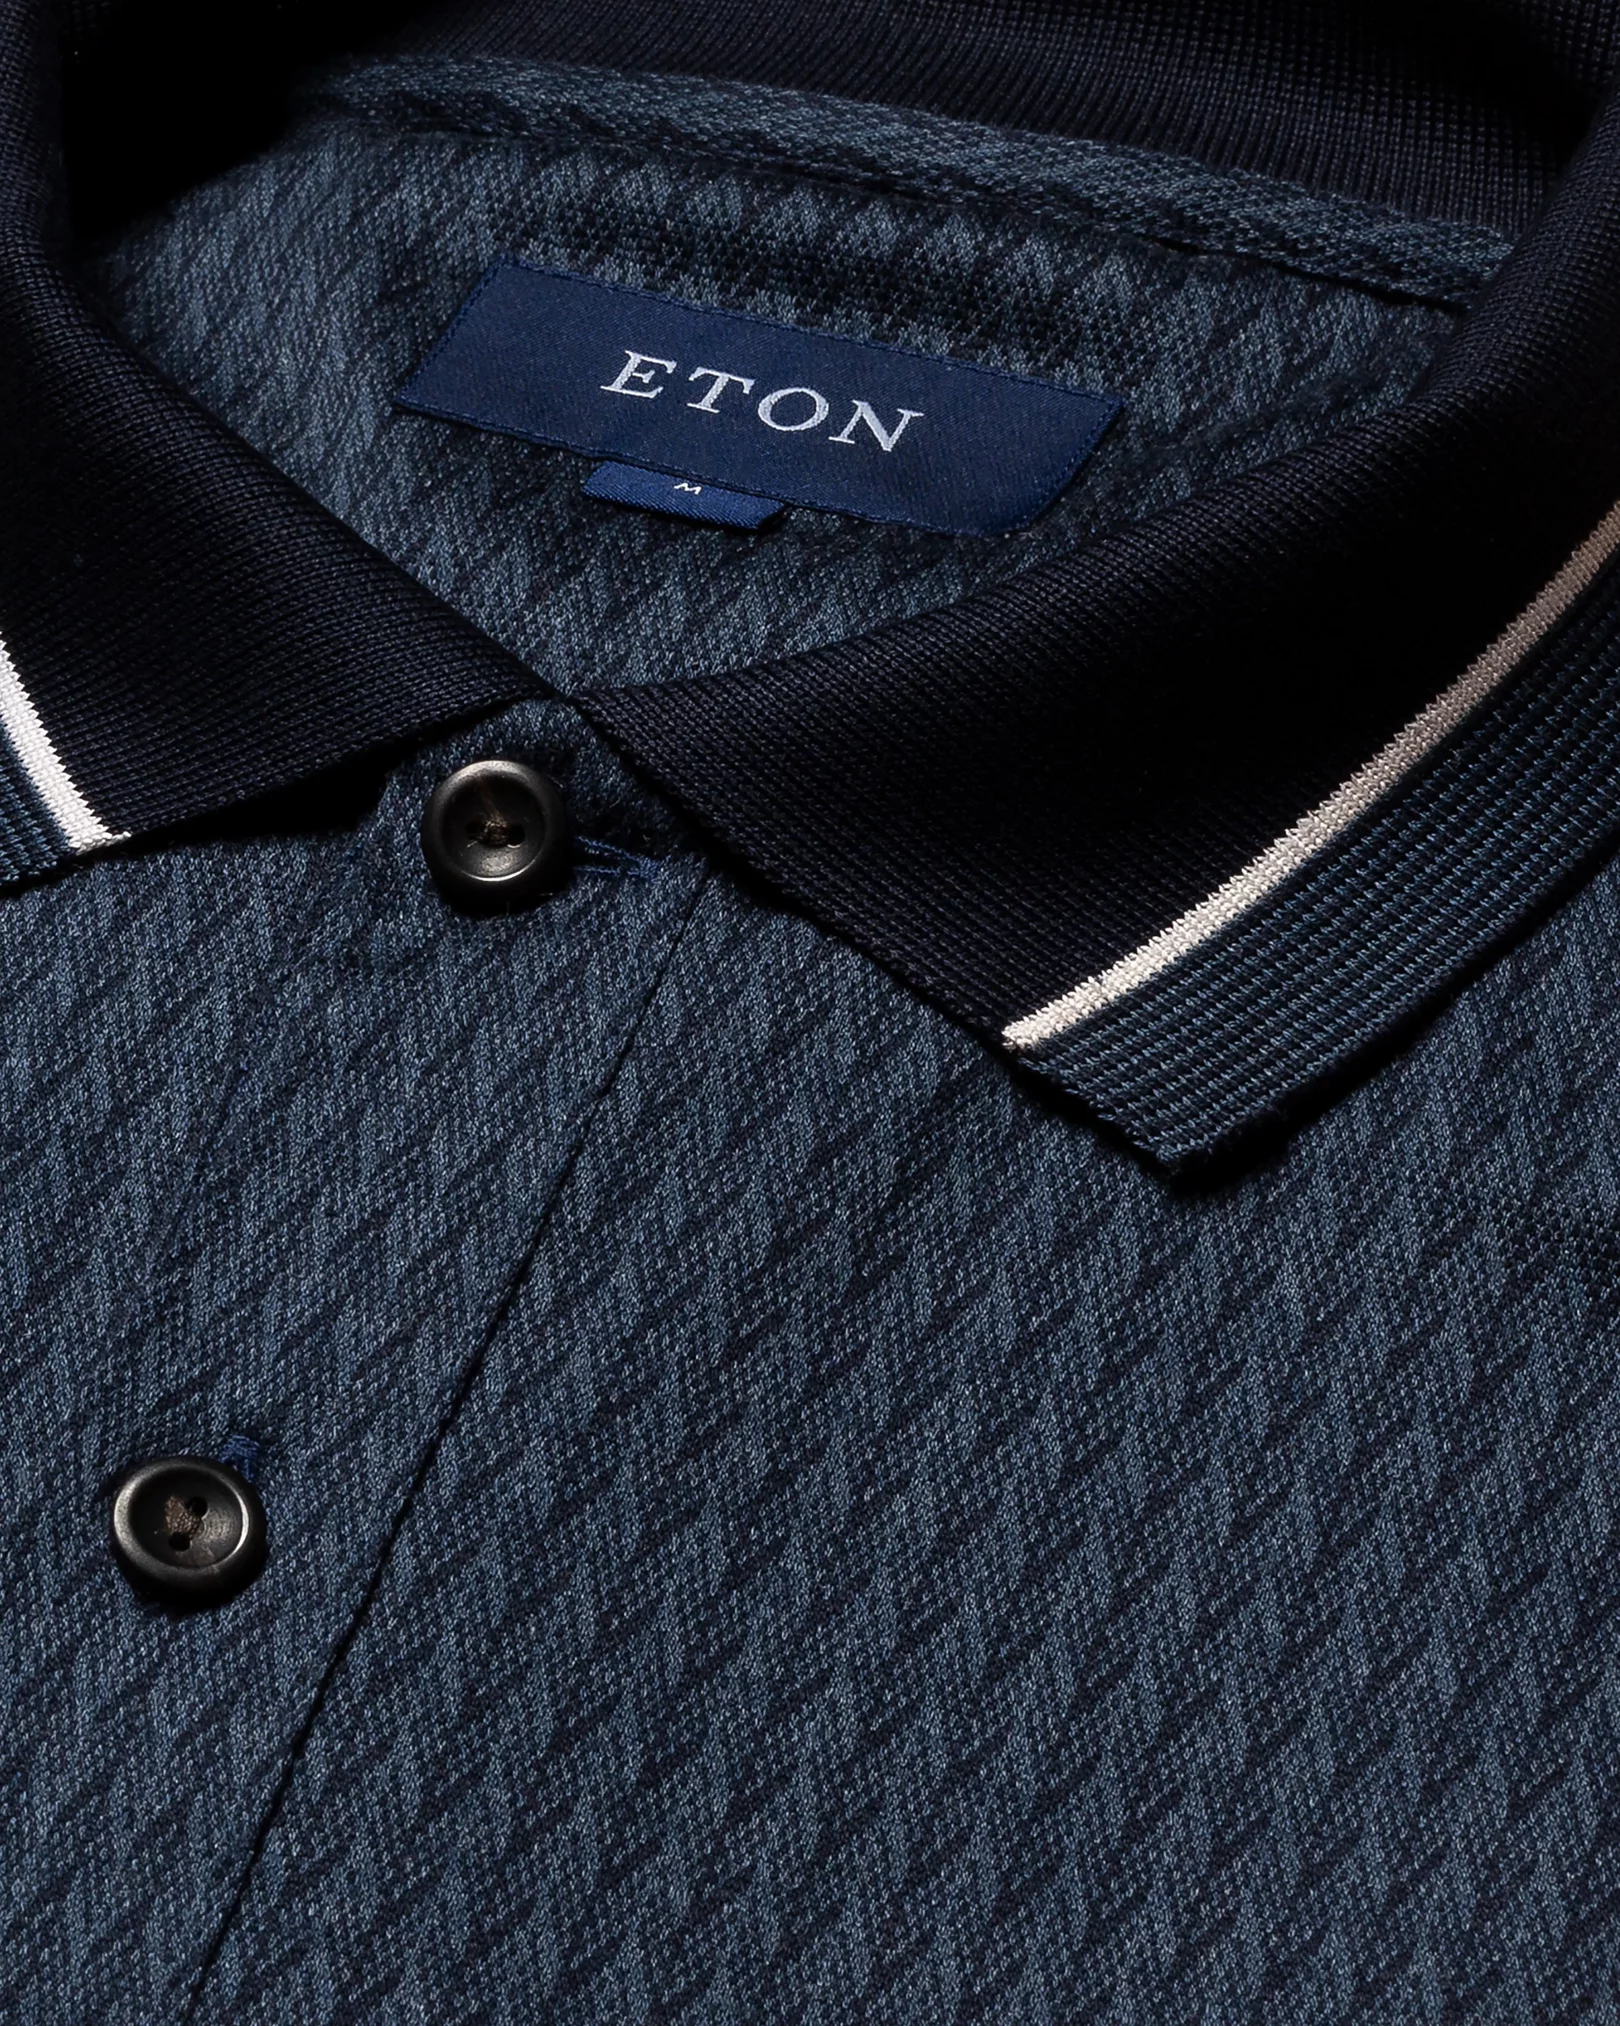 Navy Filo di Sleeve Eton Scozia - Jacquard Polo - Long Shirt